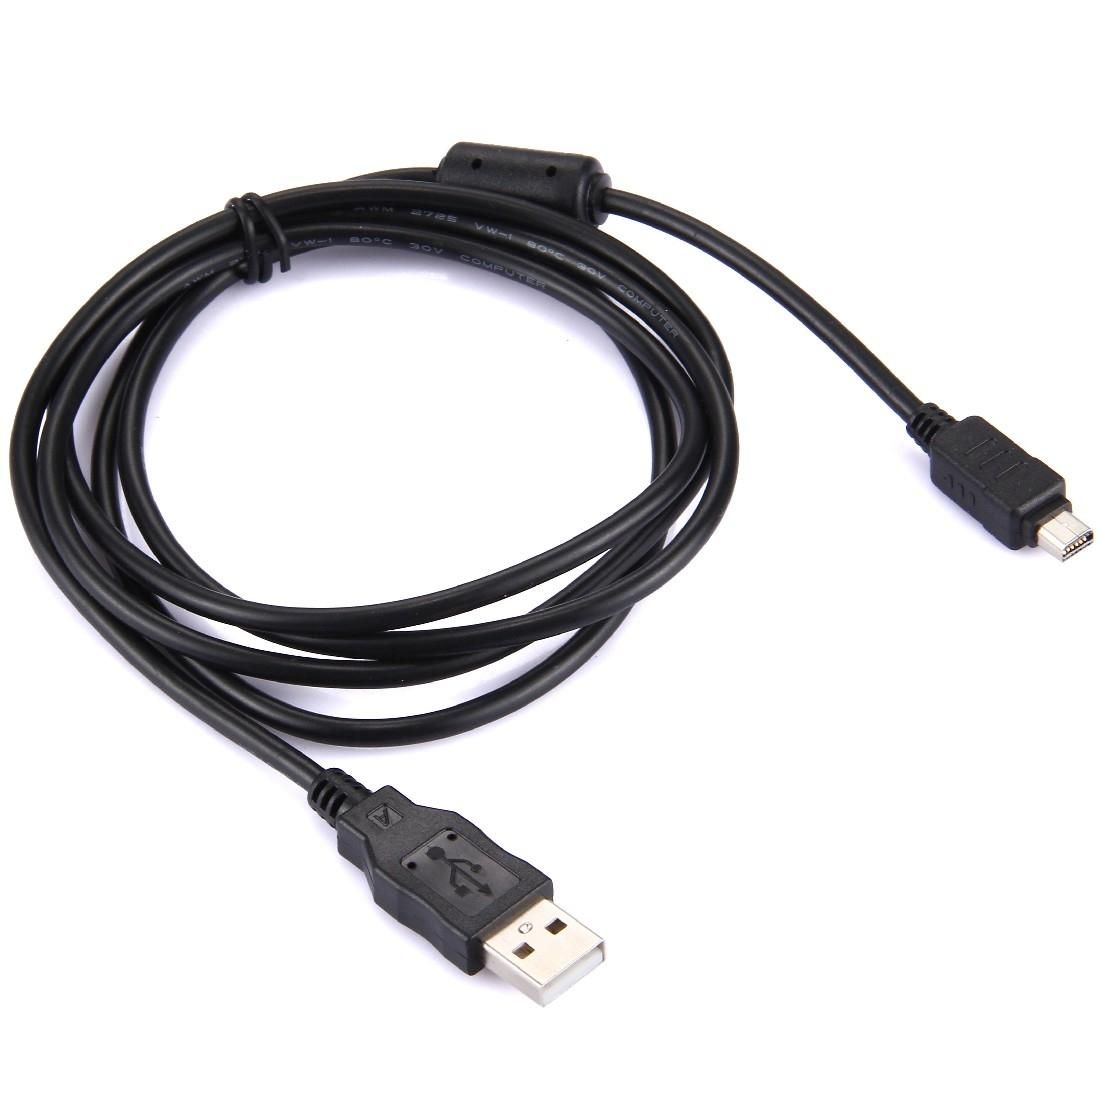 12 Pin Digital Camera USB Data Cable for Olympus FE140 / U830 / U840 / U850 / D425 / D435, Length: 1.5m (Black)